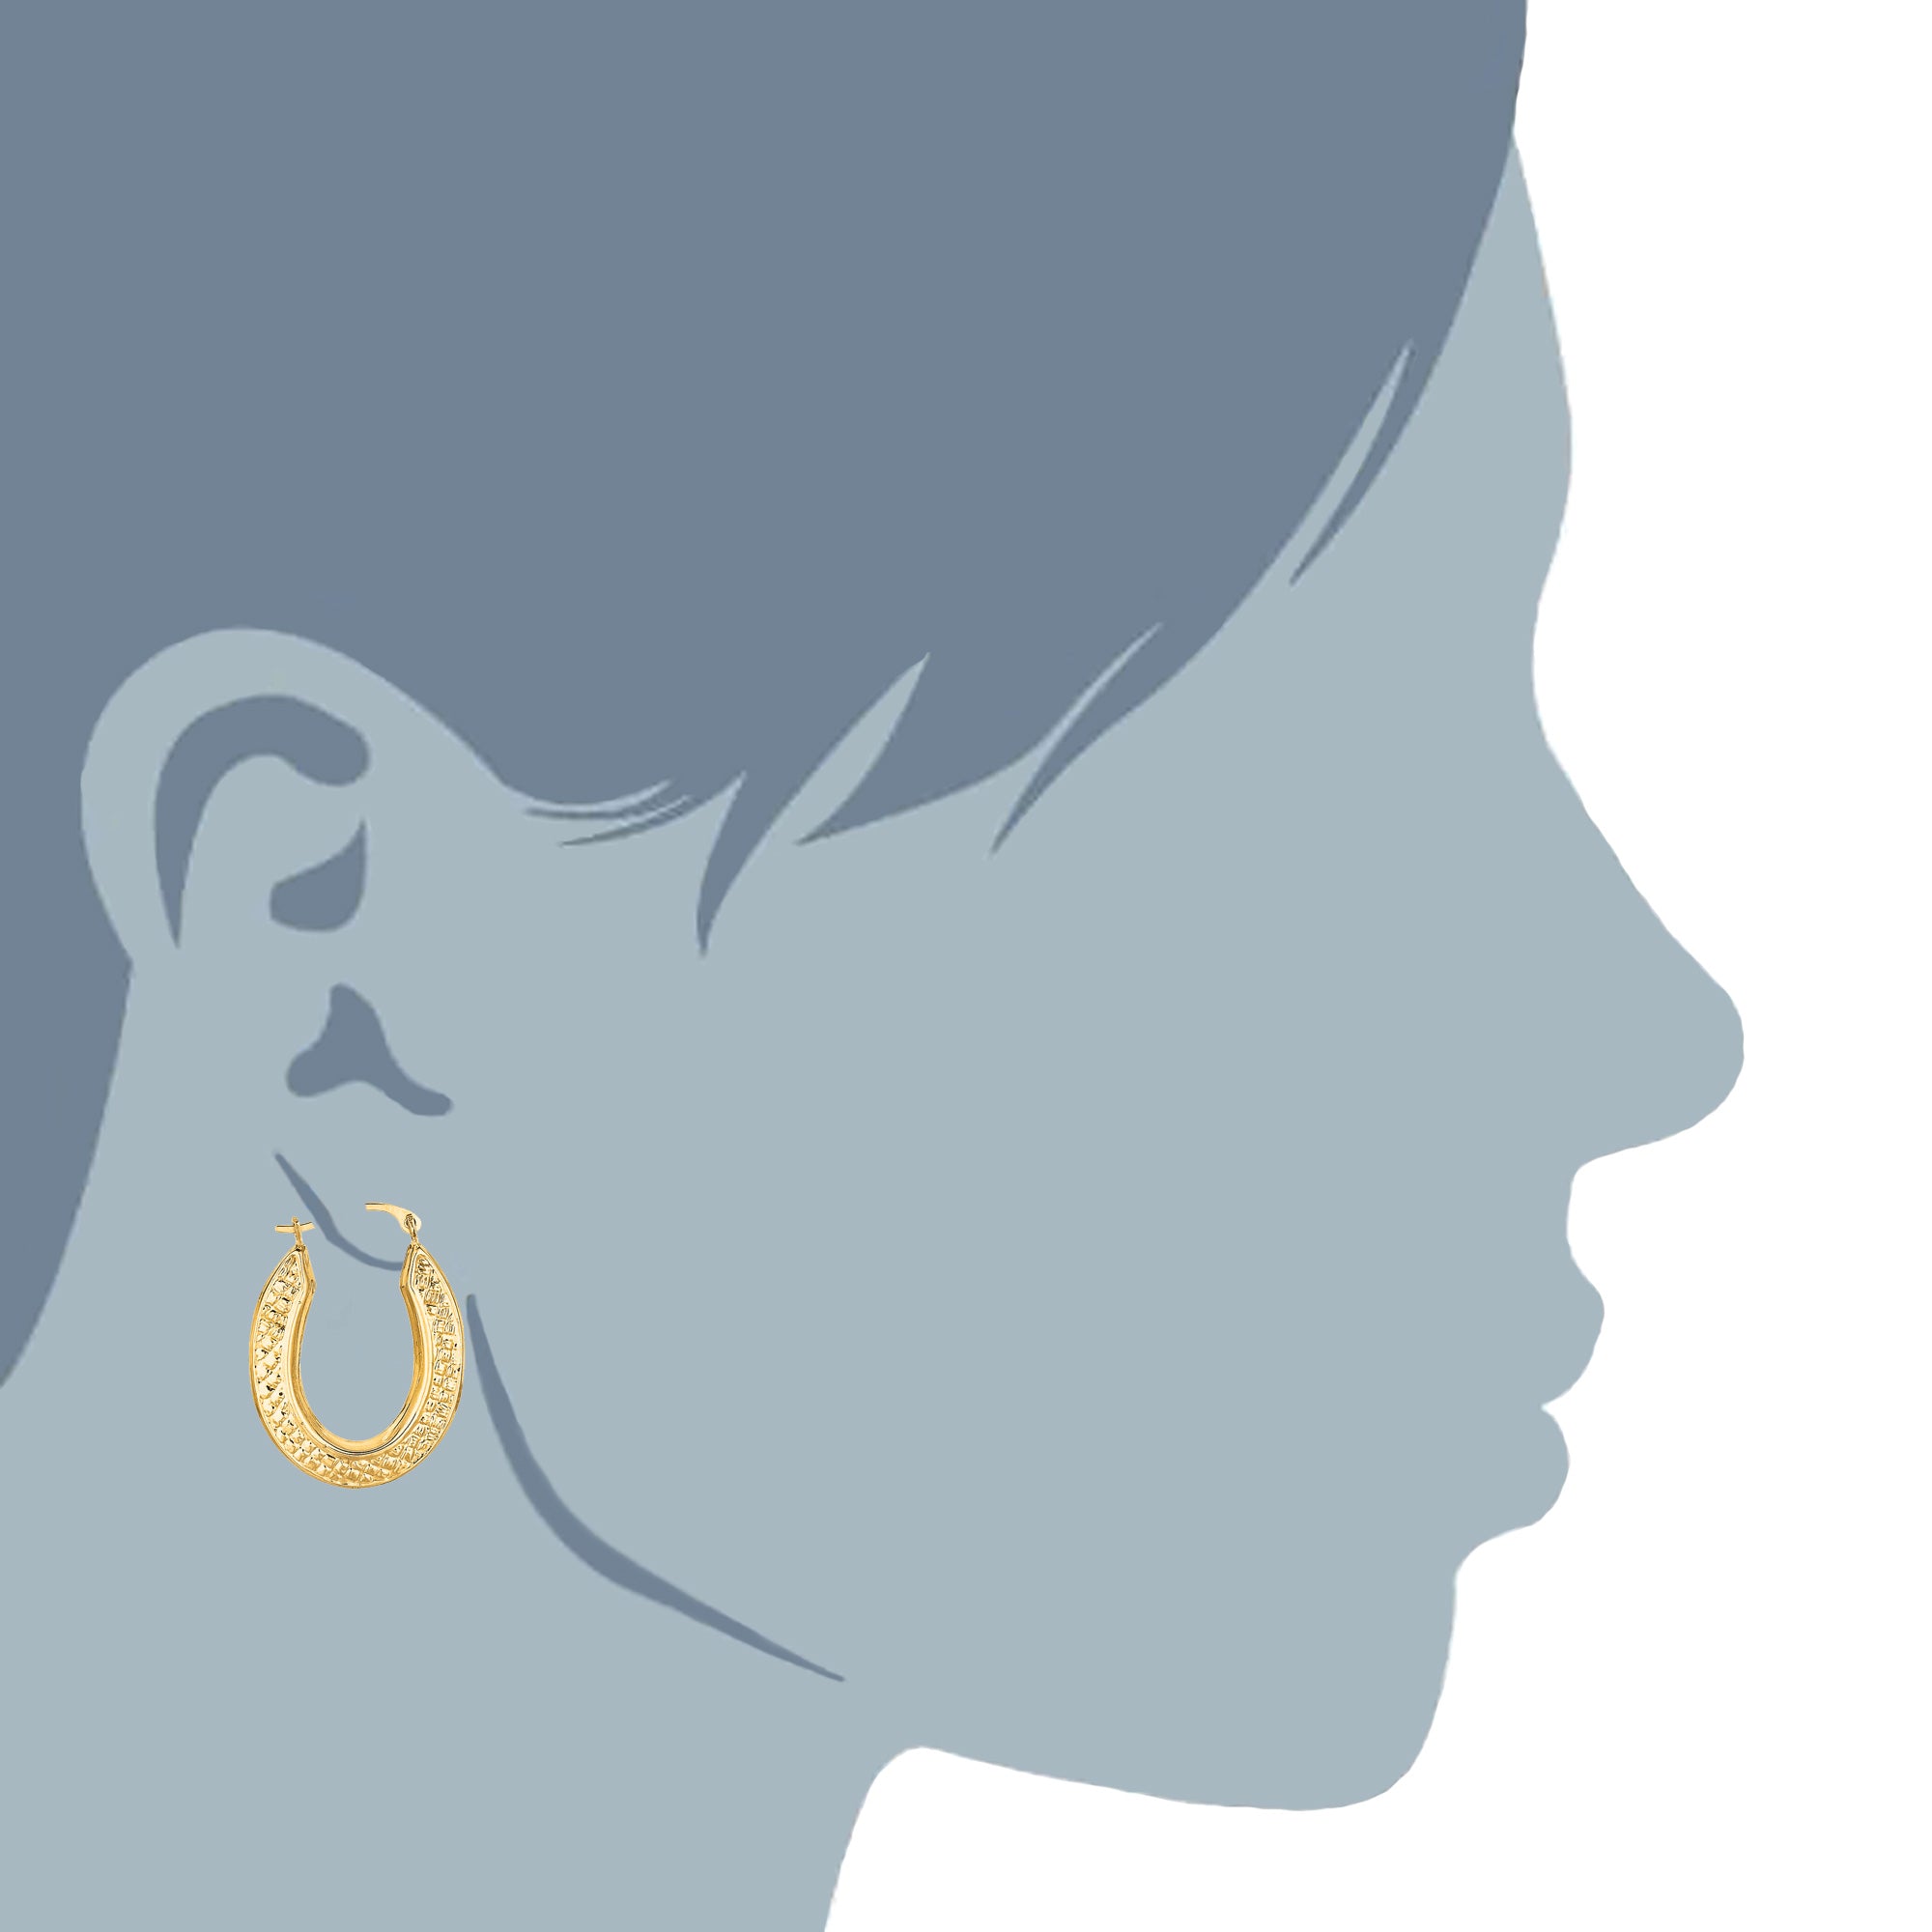 10k Yellow Gold Weave Texture Design Oval Shape Hoop Earrings fine designer jewelry for men and women